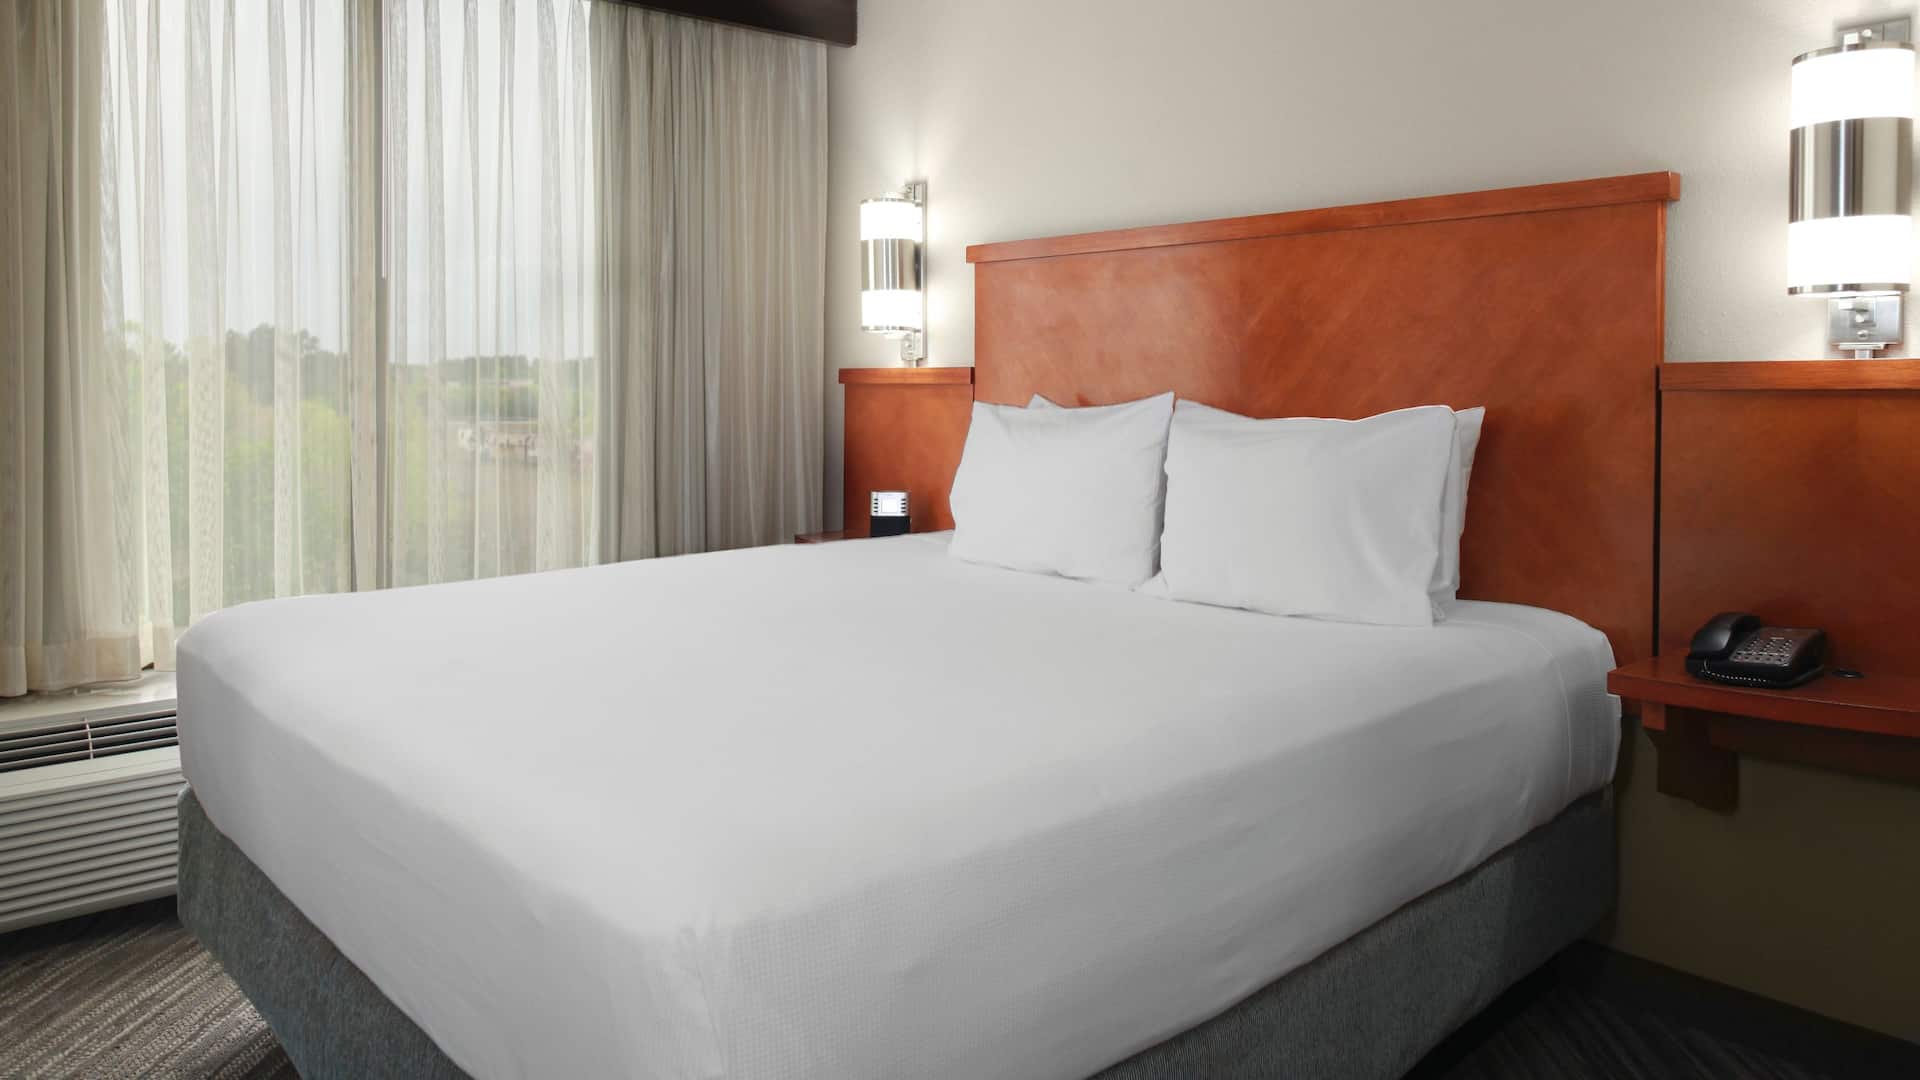 Cincinnati hotel room with king sized bed at Hyatt Place Cincinnati Northeast 